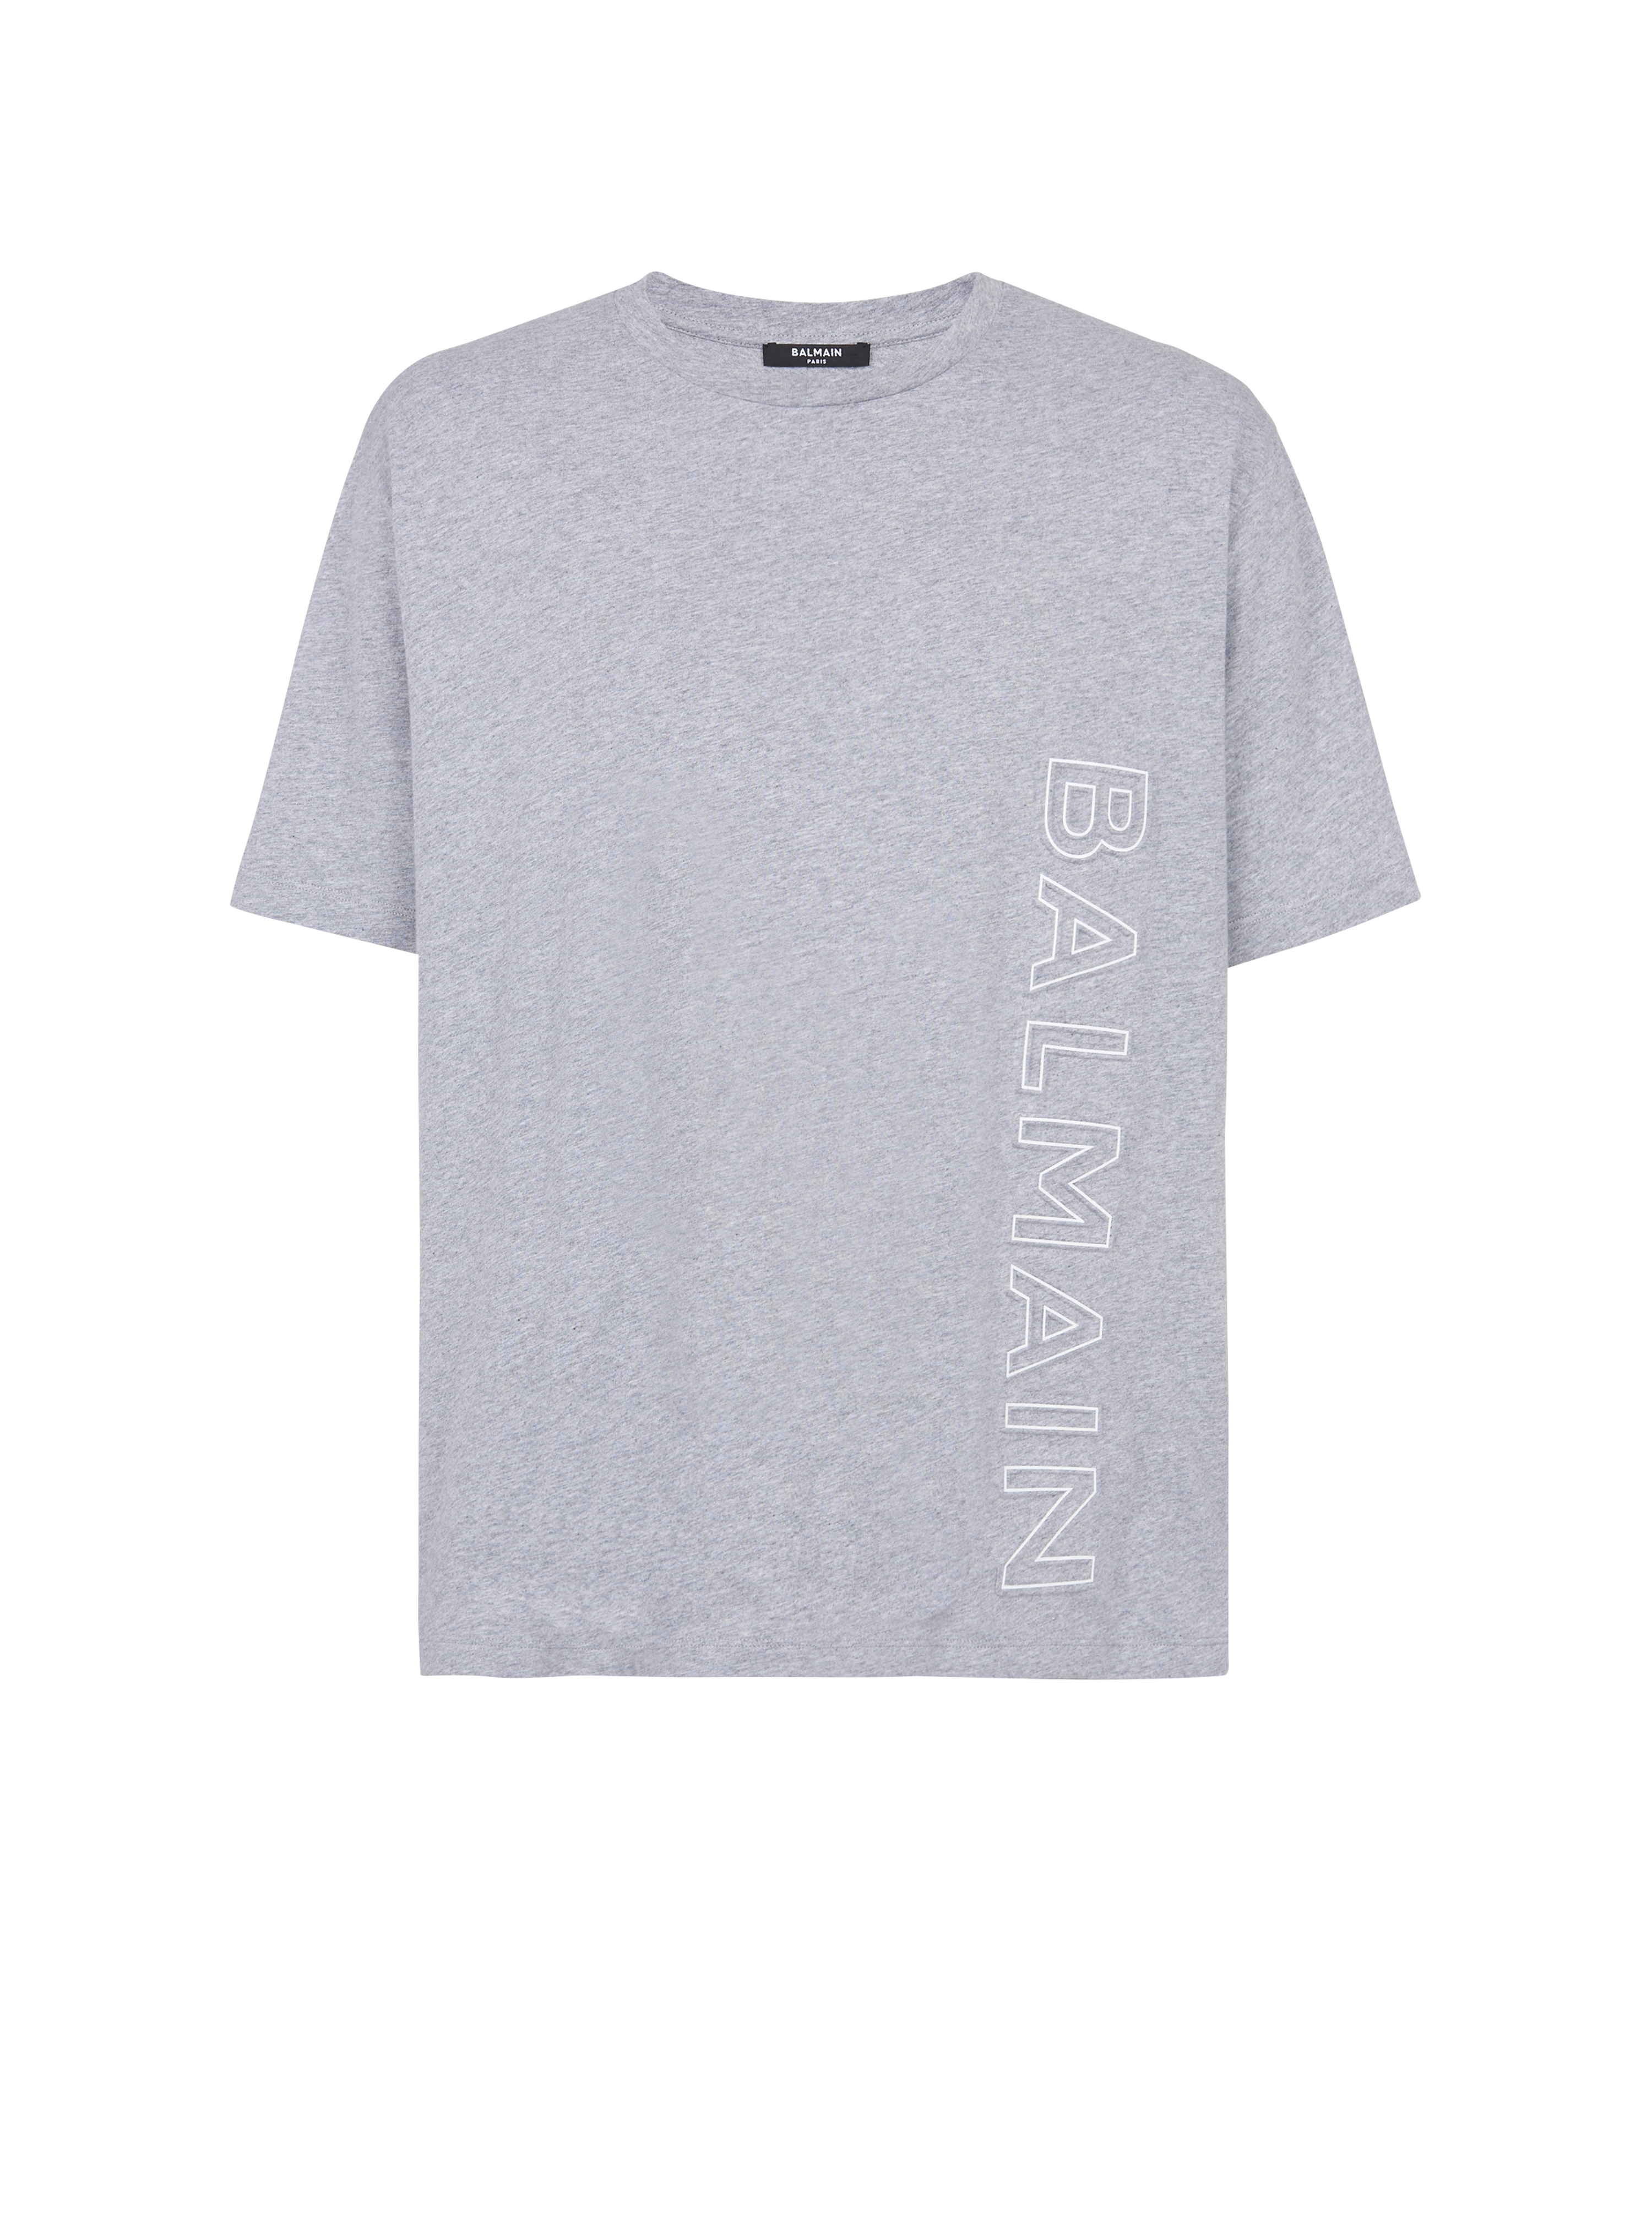 Balmain巴尔曼反光标志环保设计棉质T恤衫, grey